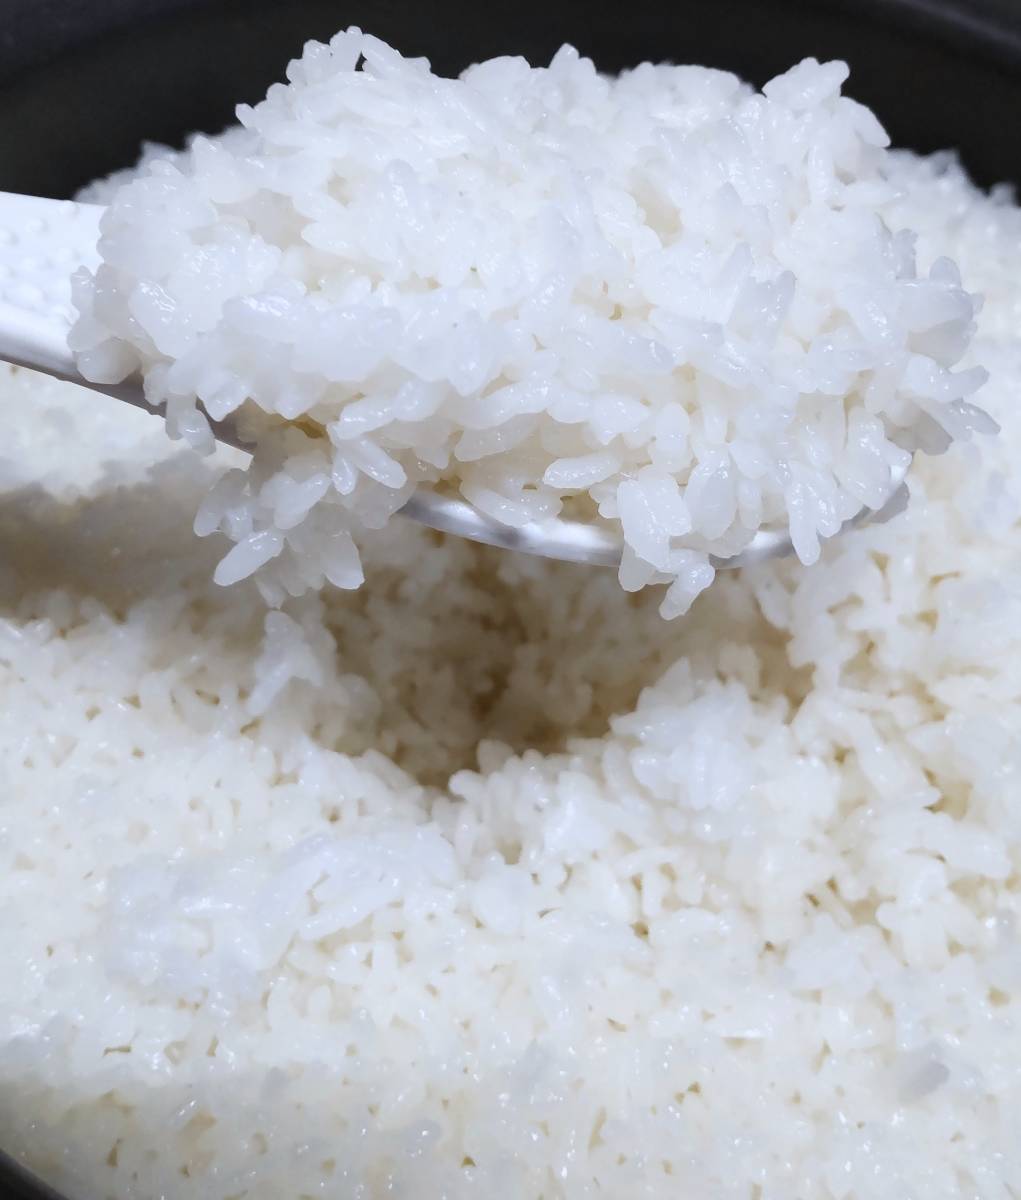 o рис 15....2.3. takkyubin (доставка на дом) compact сельское хозяйство дом прямые продажи американский производство рис белый рис Kumamoto префектура производство Kikuchi производство Hino hikari .. .... рис . мир 5 год 2023 год .. минут 